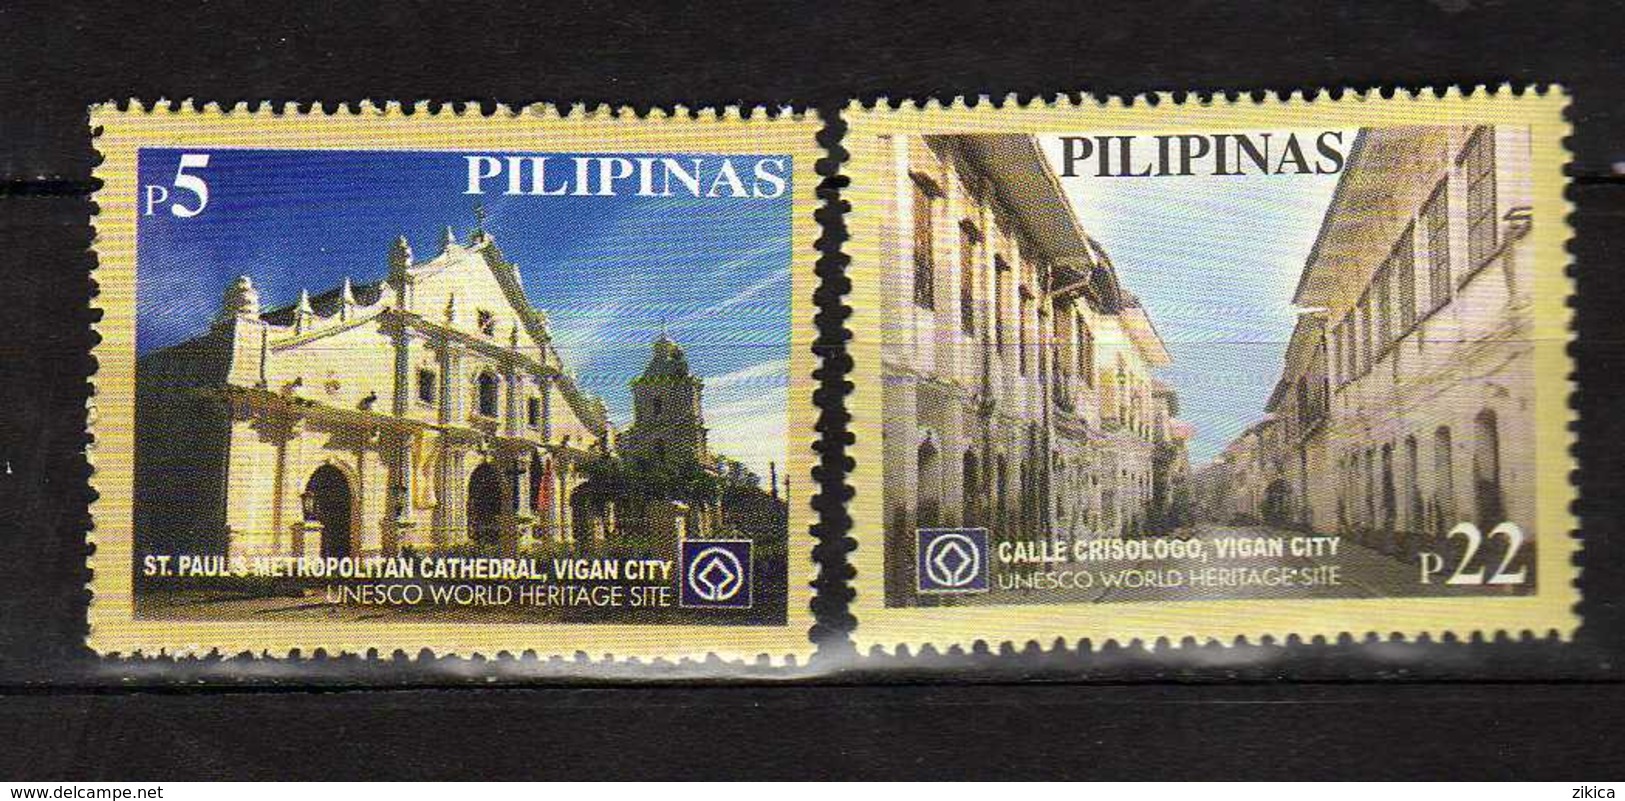 Philippines 2002 UNESCO World Heritage Sites - Vigan City, Ilocos Sur Province.MNH - Philippines